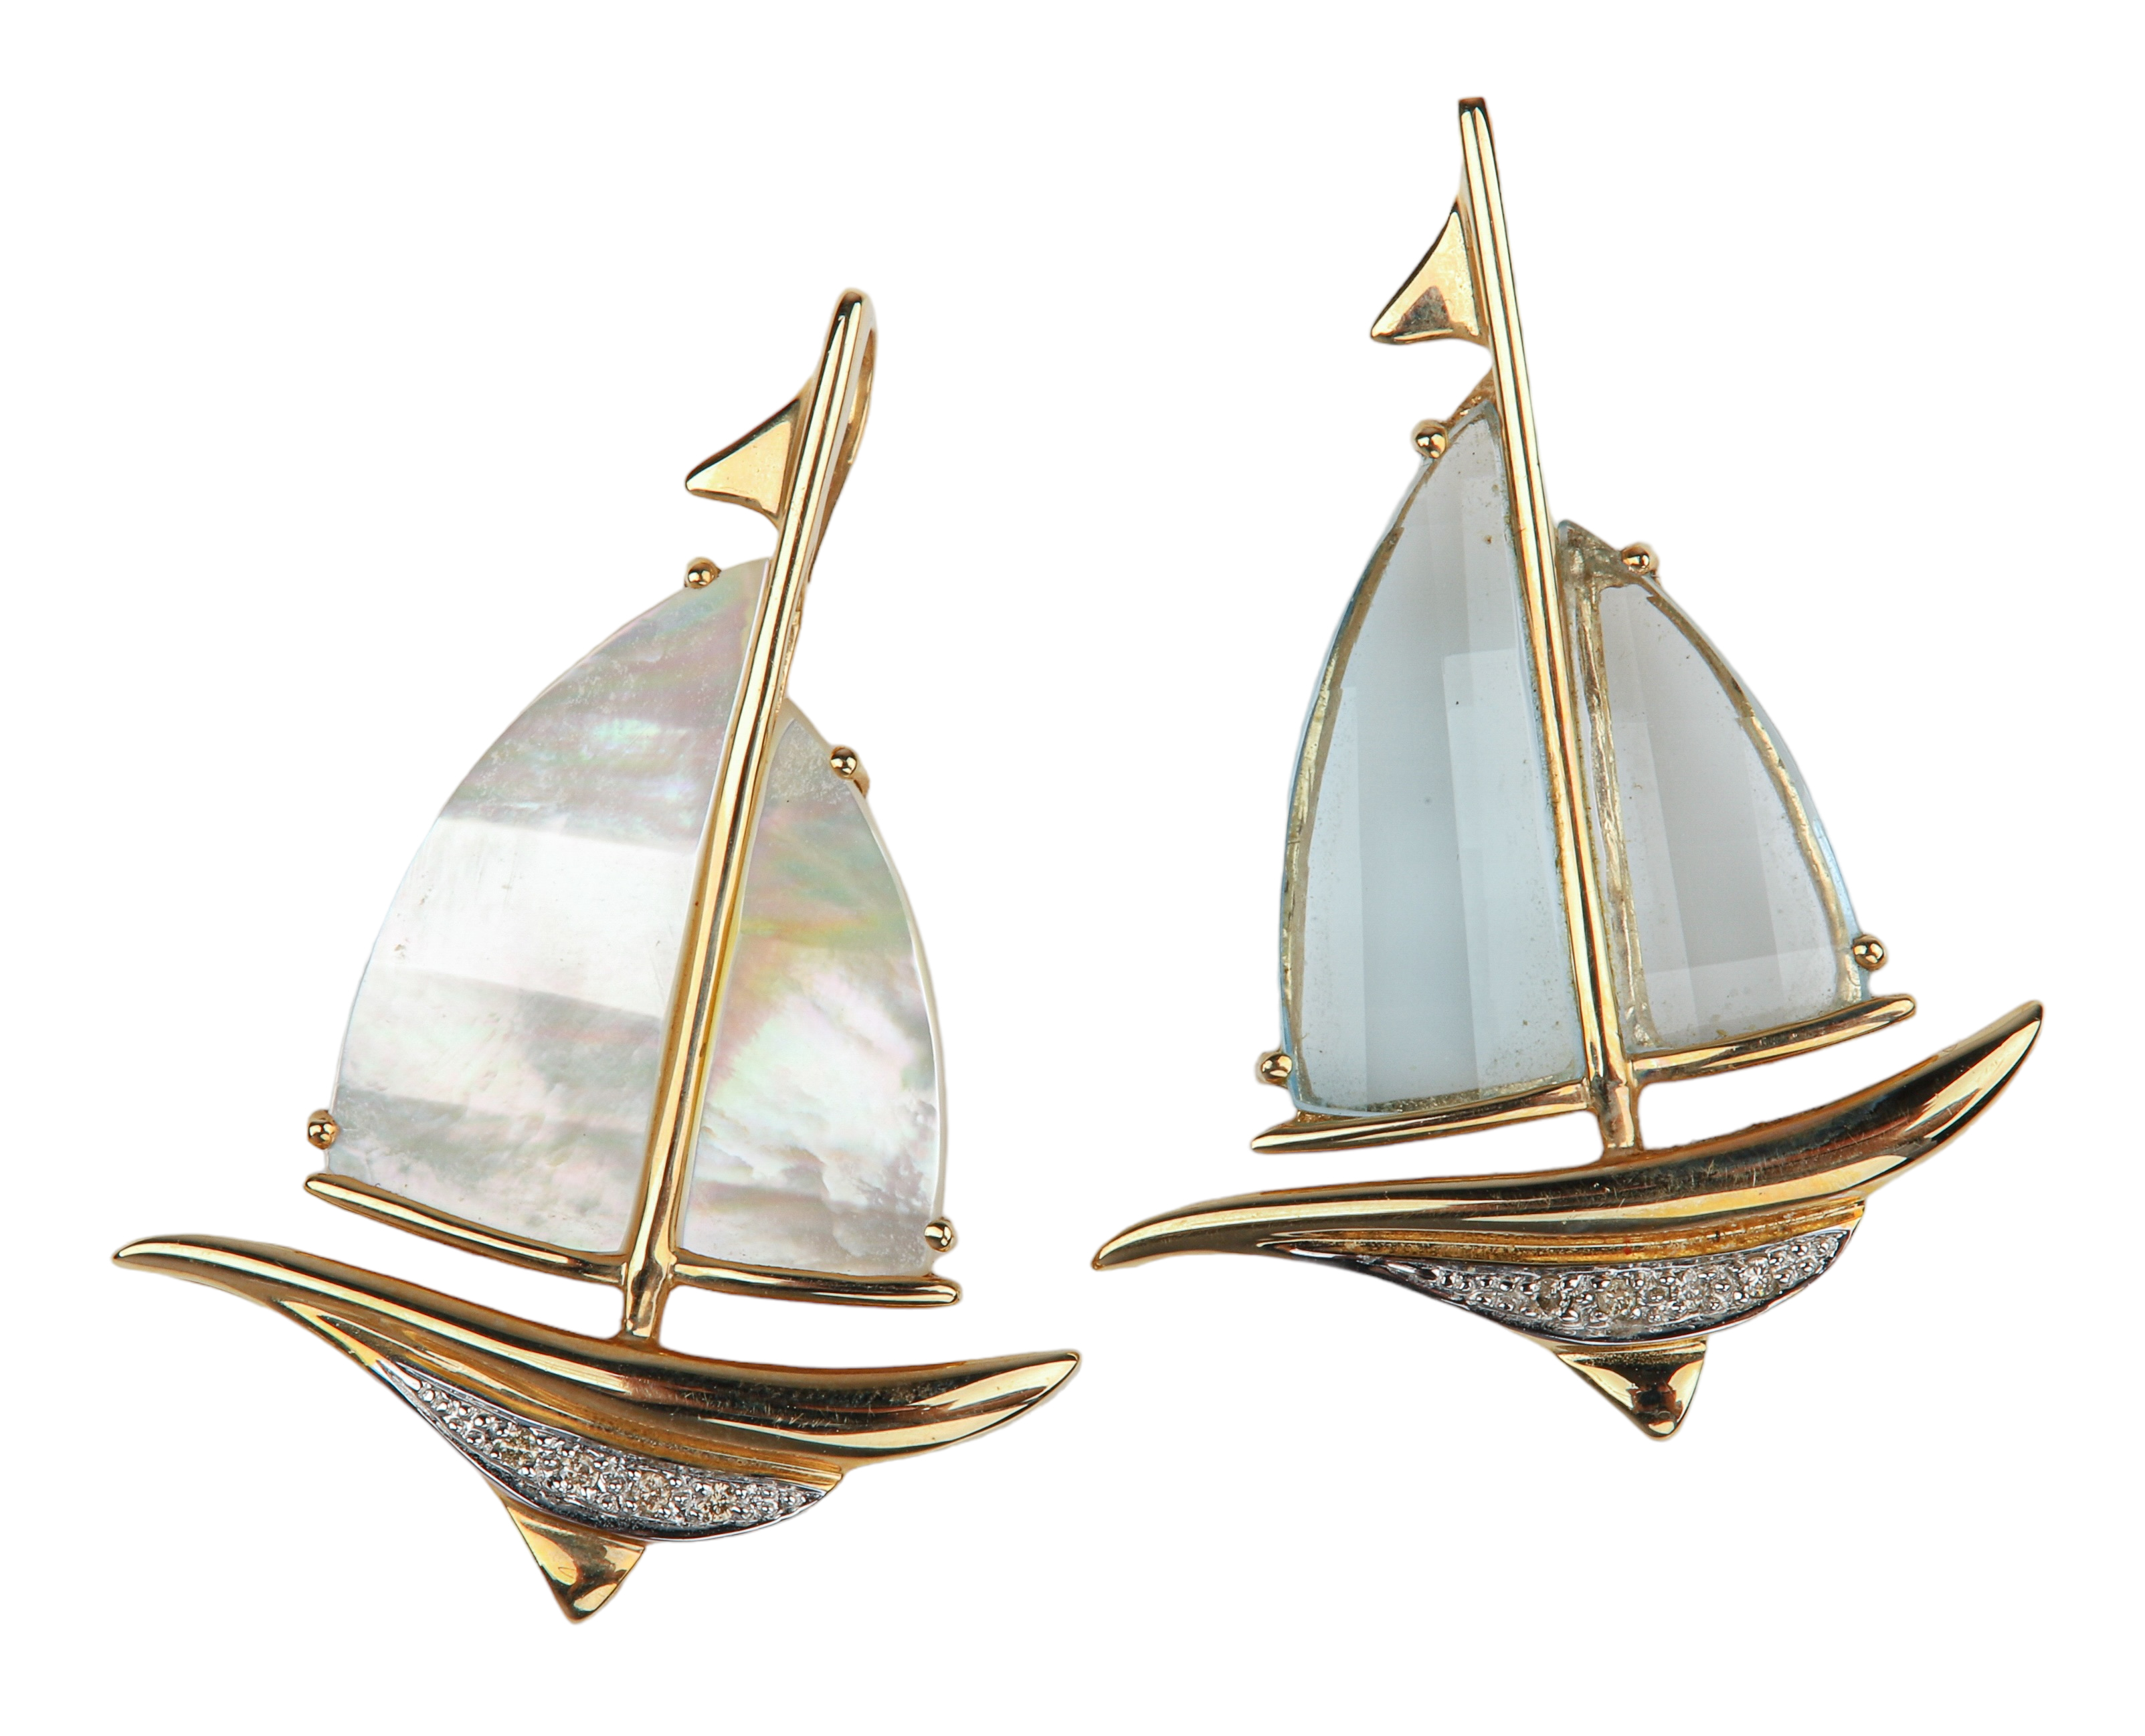  2 14K yellow gold sailboat pendants  3b18f6